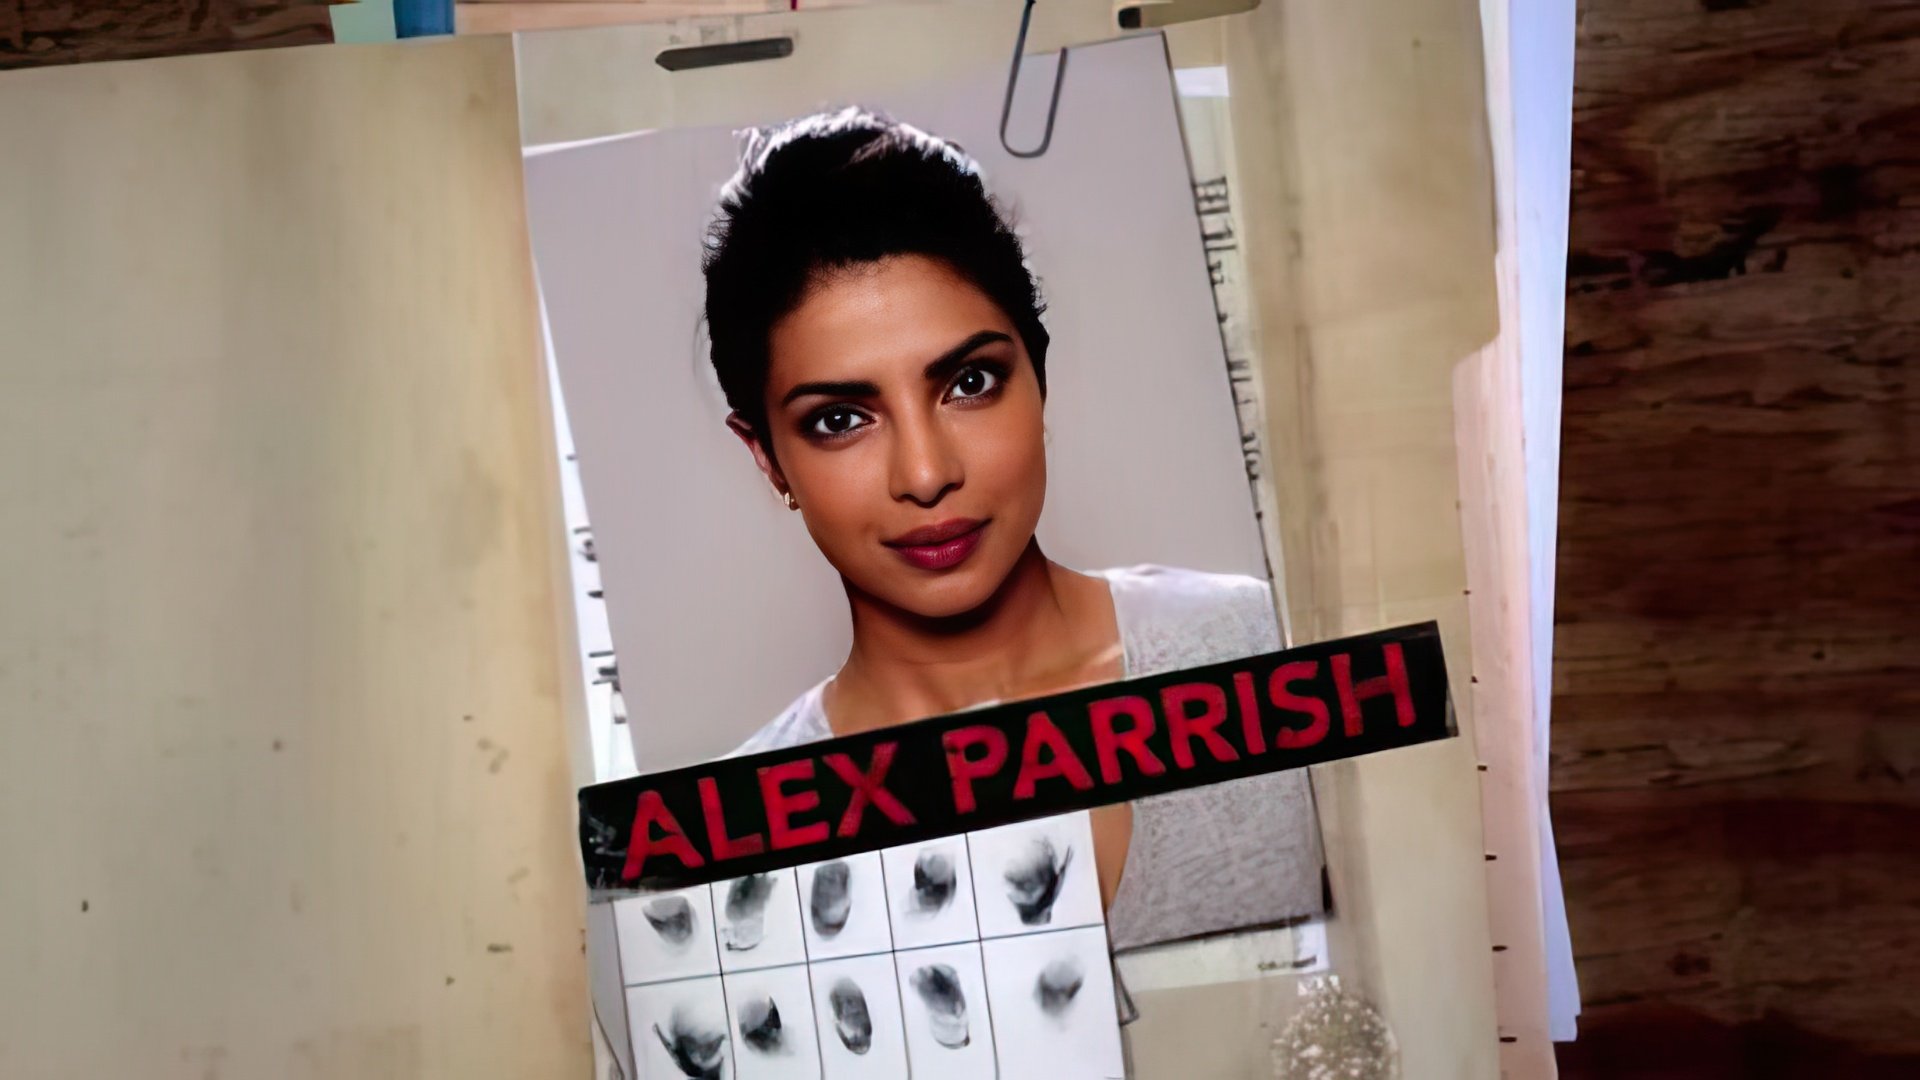 Alex Parrish – Priyanka Chopra’s character in the Quantico series